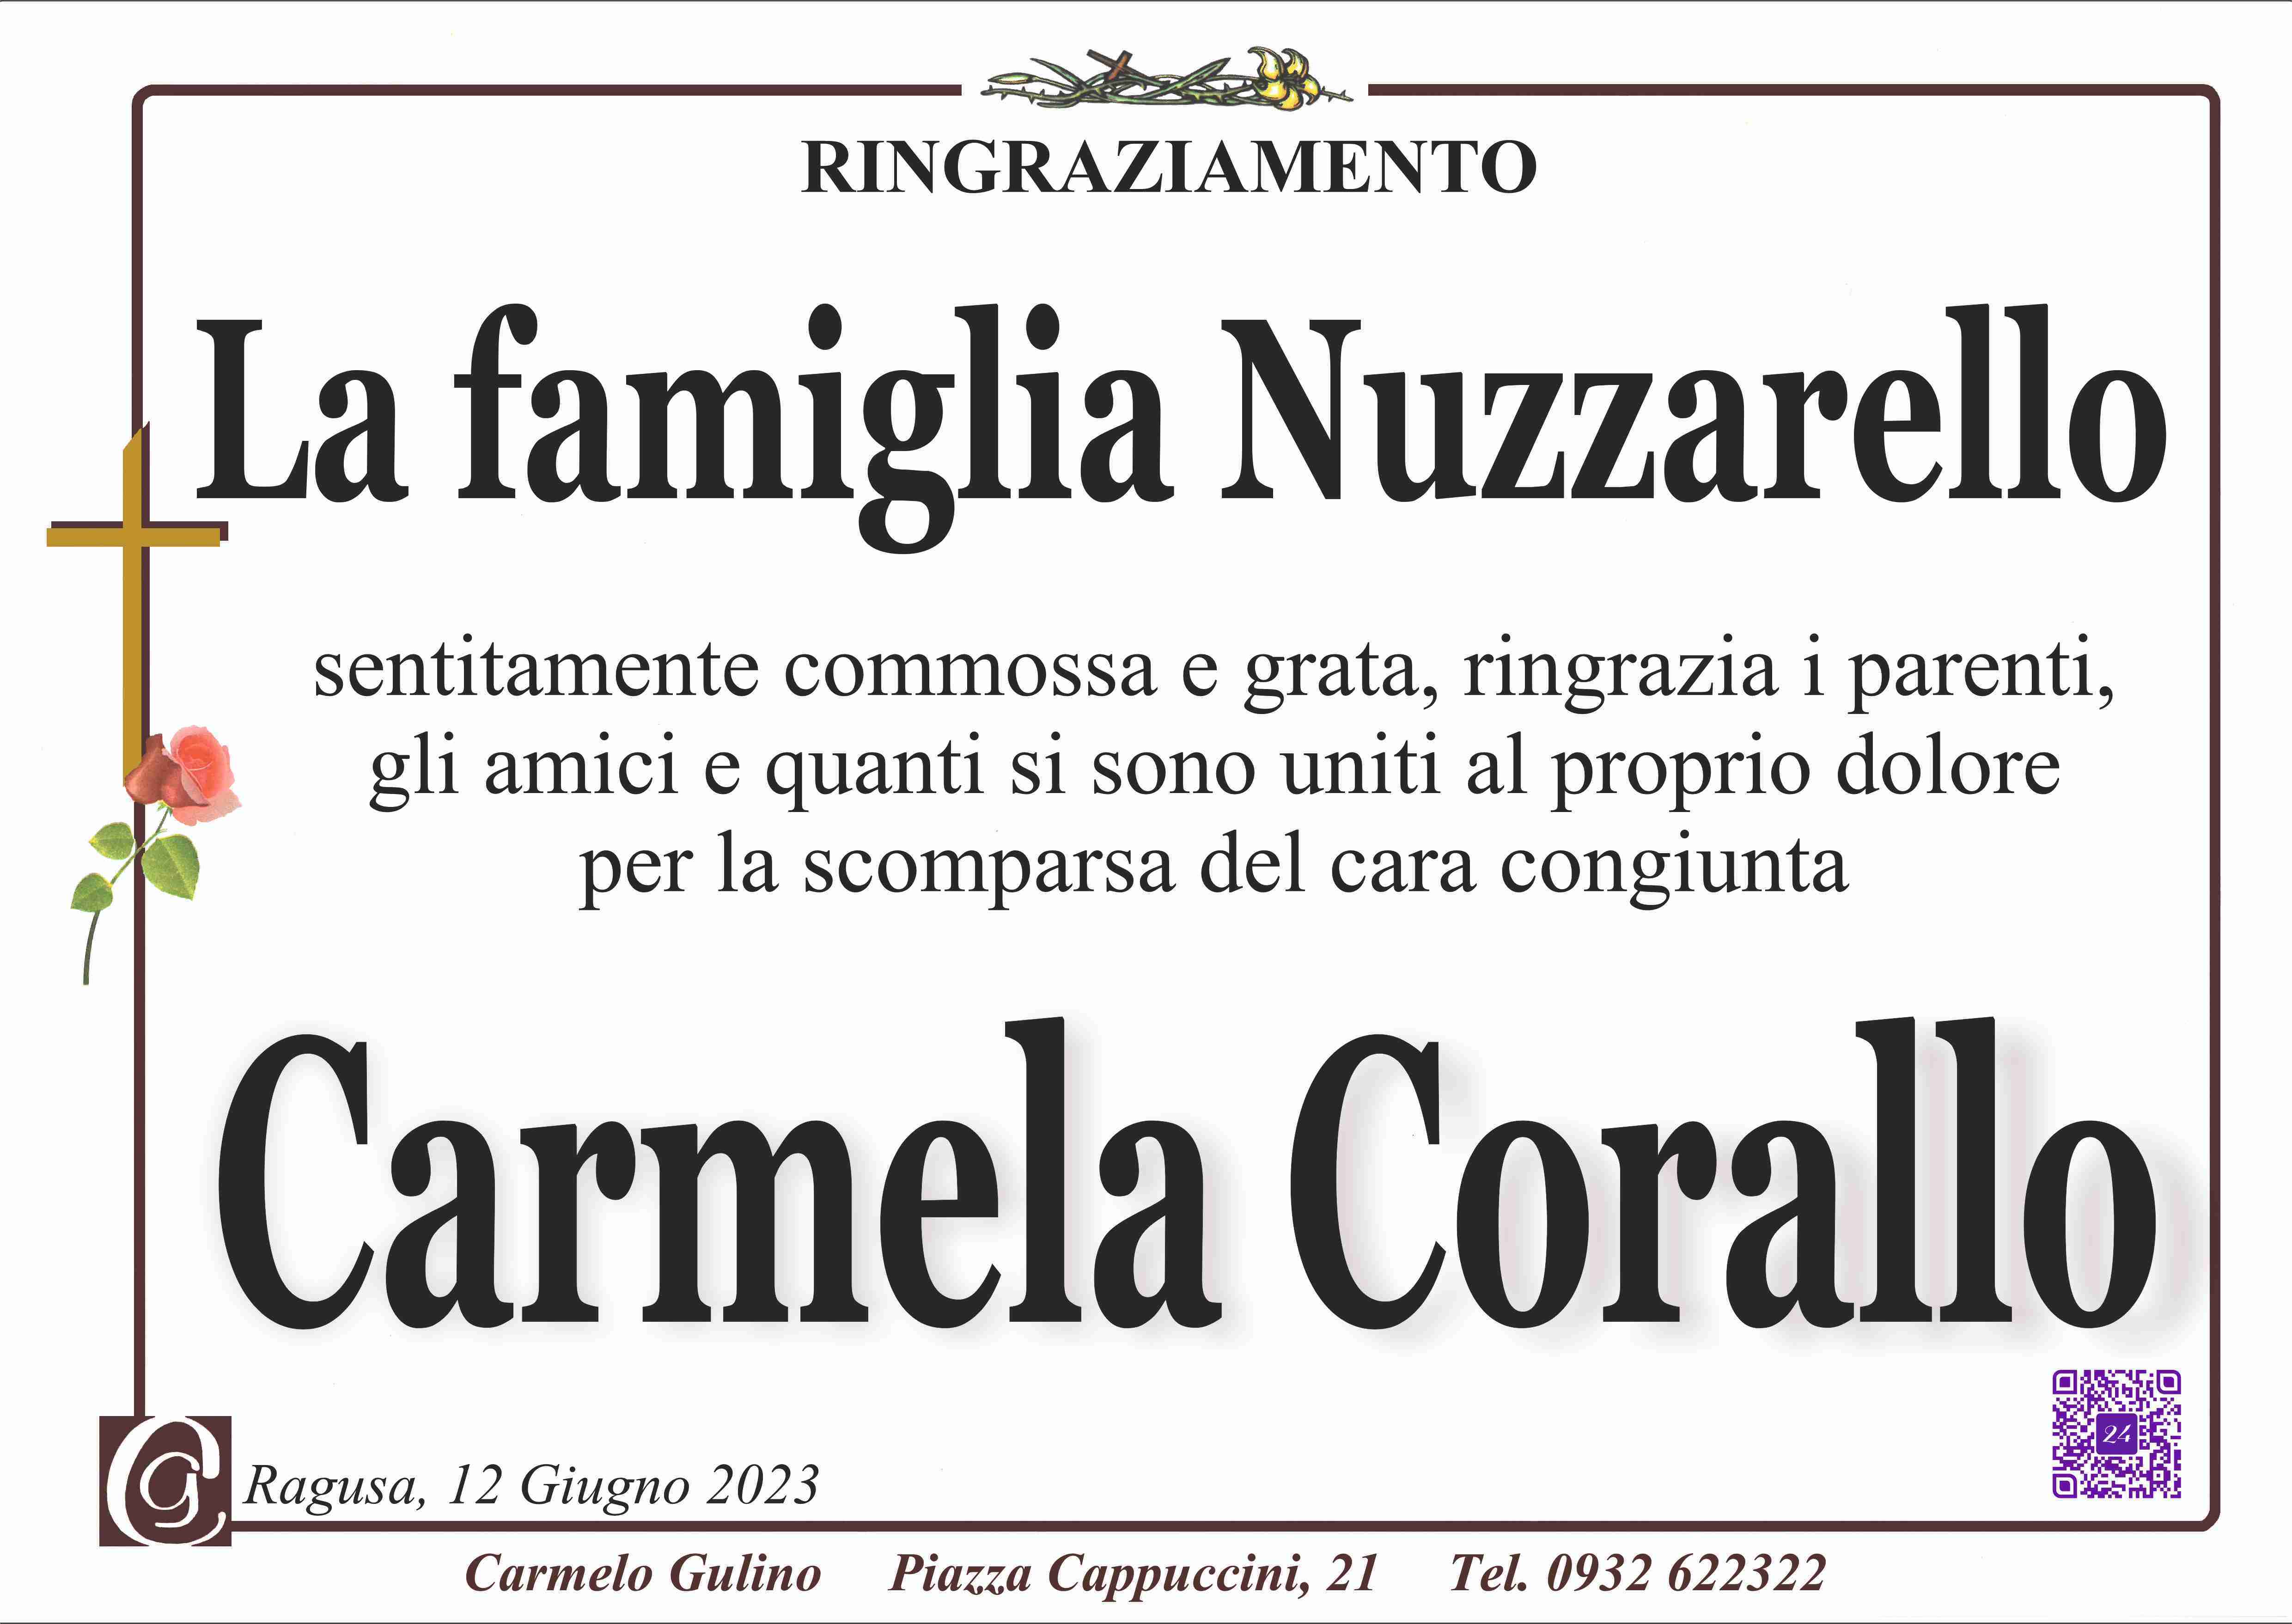 Carmela Corallo